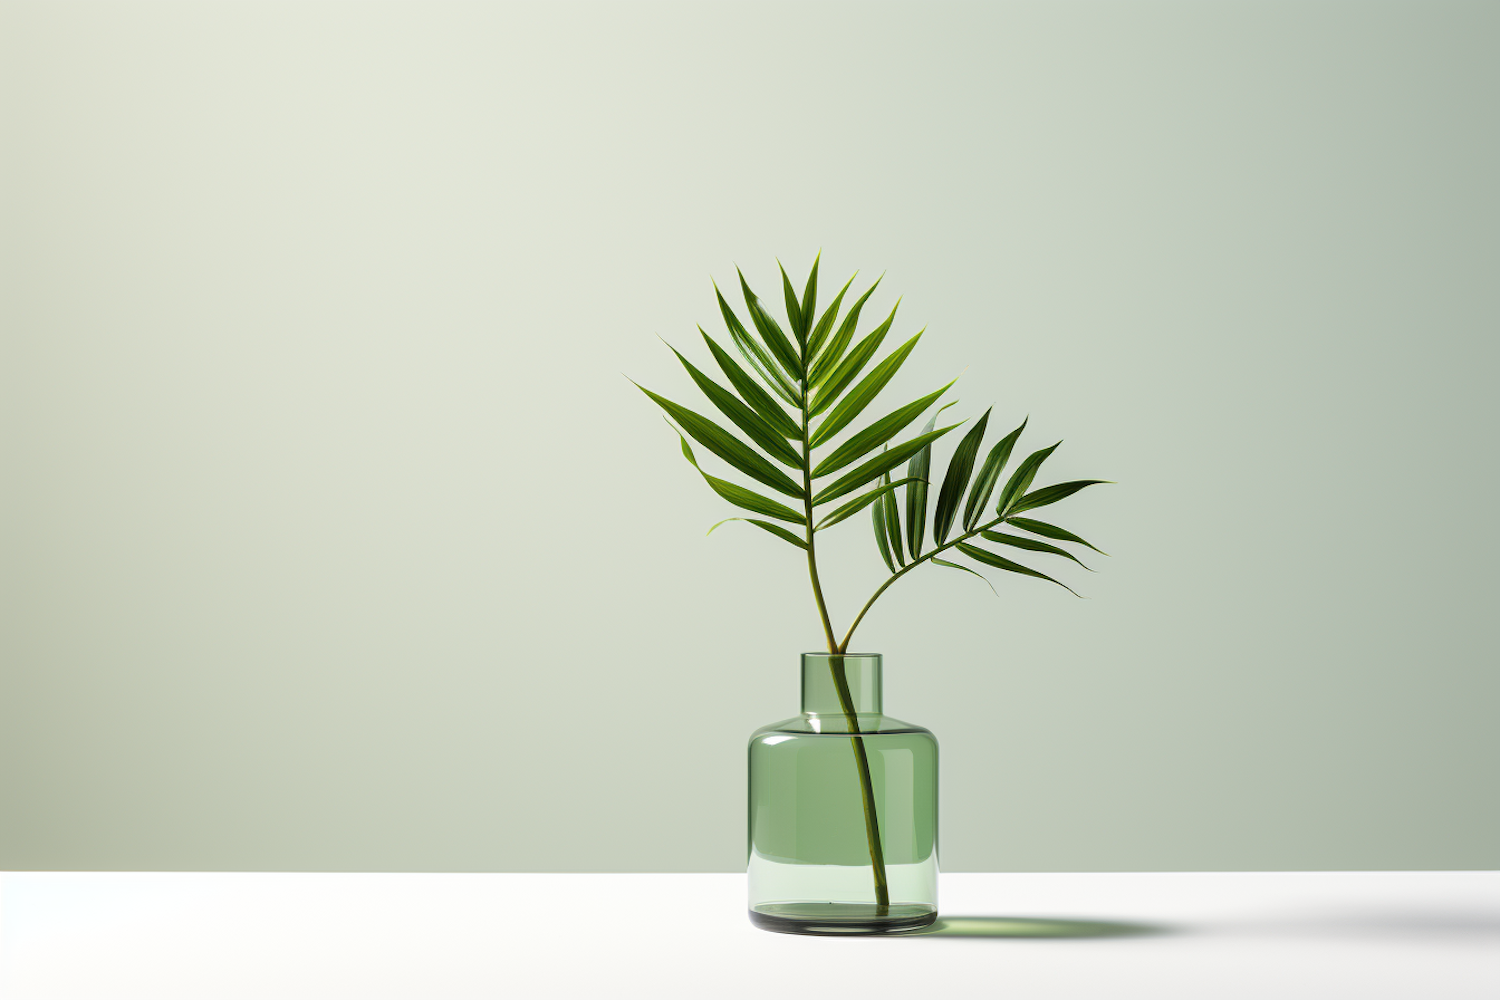 Tranquil Verdure: Minimalist Green Vase with Plant